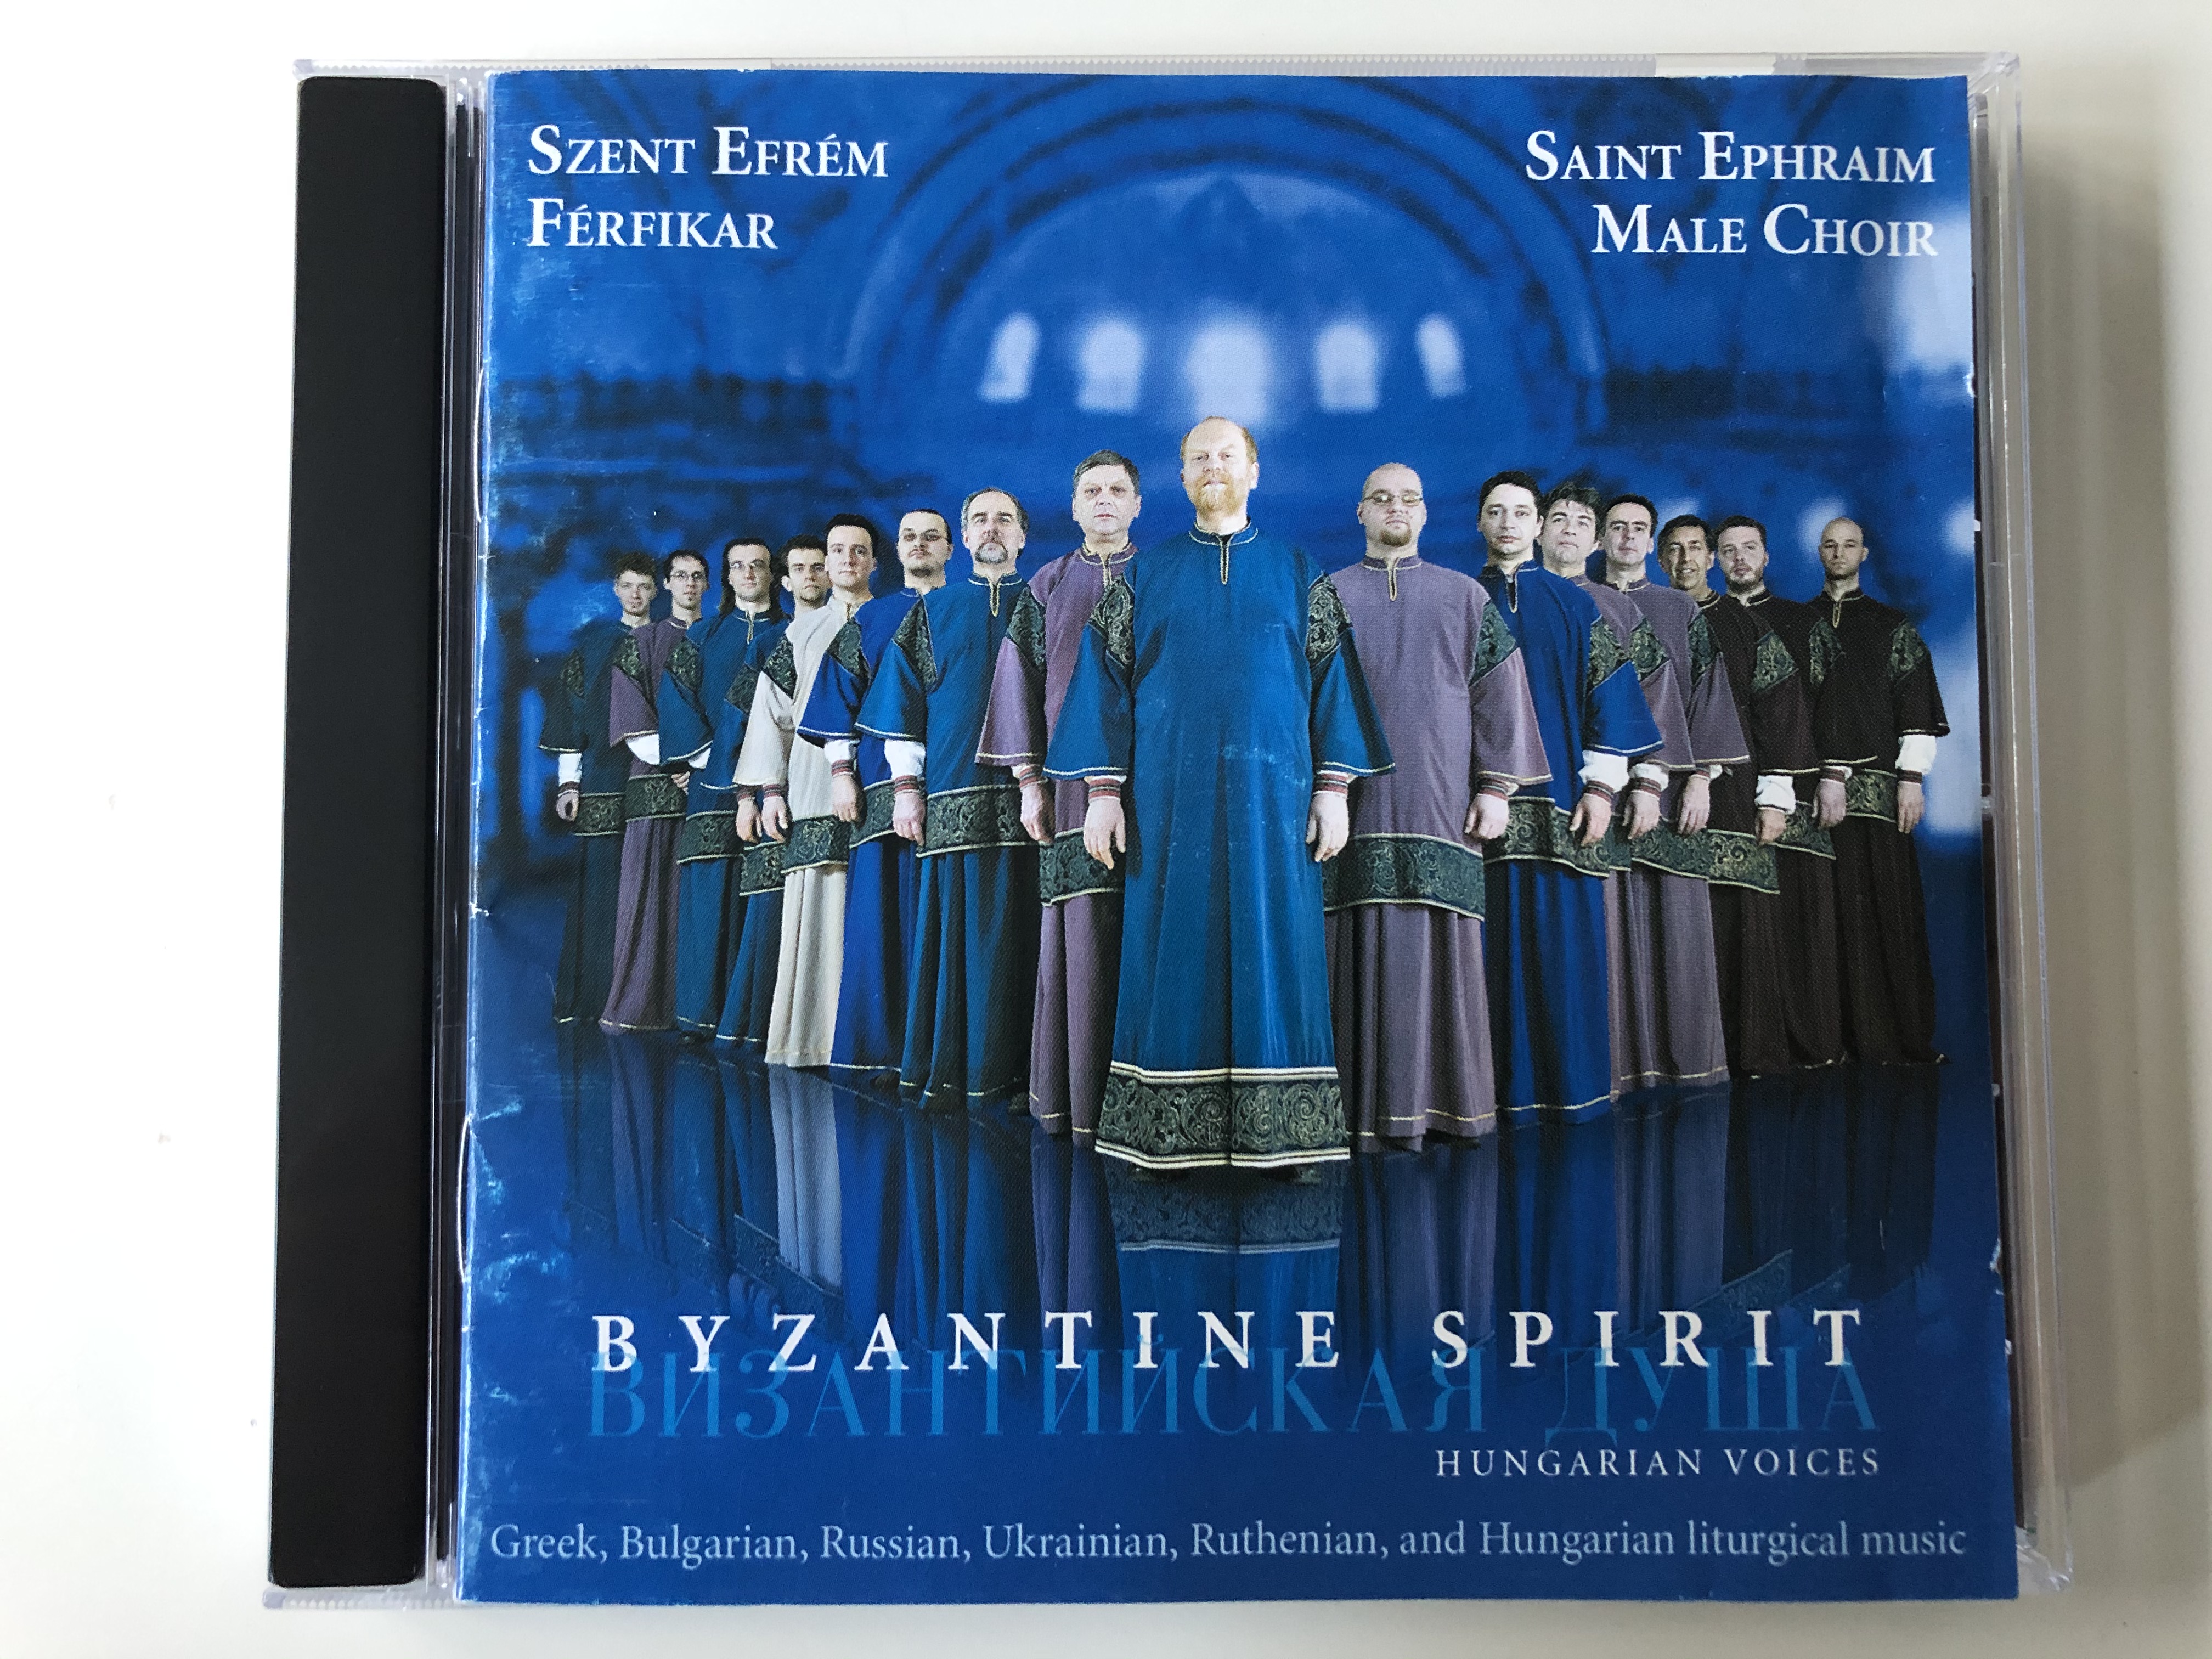 byzantine-spirit-hungarian-voices-saint-ephraim-male-choir-greek-bulgarian-russian-ukrainian-ruthenian-and-hungarian-liturgical-music-orpheia-audio-cd-2006-orp004efr1-1-.jpg